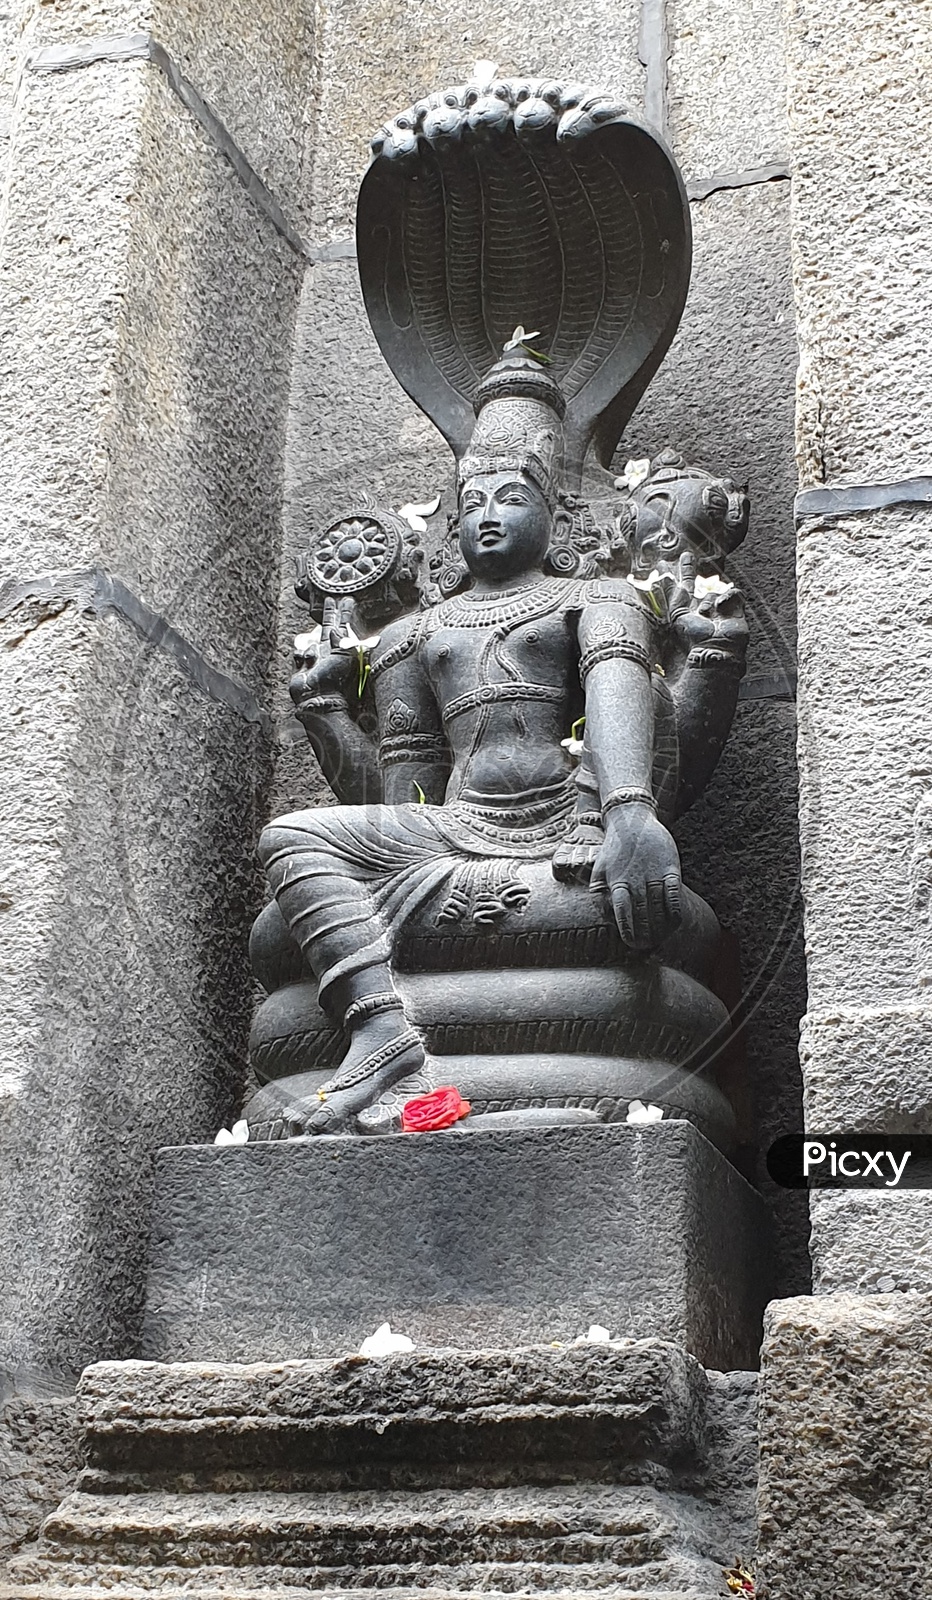 Portrait of Lord Vishnu, located on the walls of Kalyana Venkateswarara Swamy temple in  Srinivasa Mangapuram.